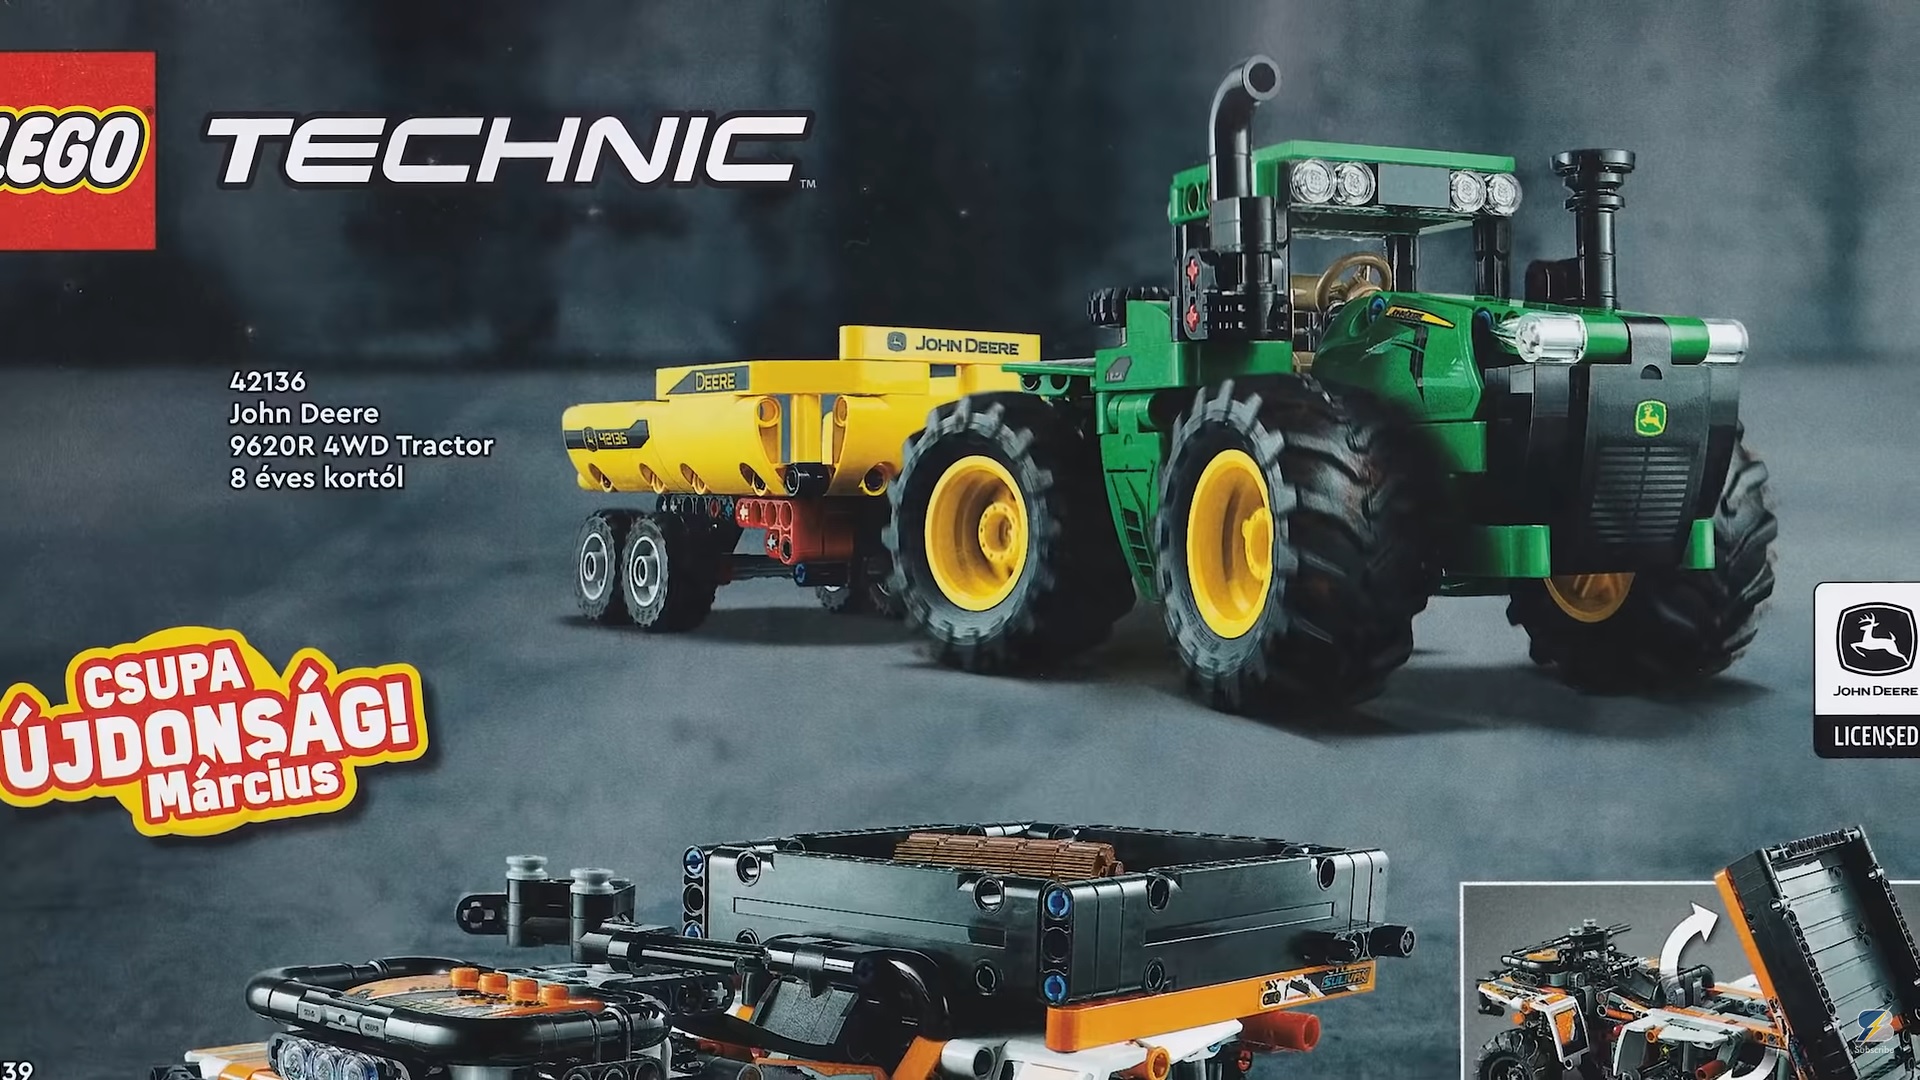 Verkleuren Donder Wolkenkrabber LEGO Technic John Deere 9620R 4WD Tractor (42136) Revealed - The Brick Fan